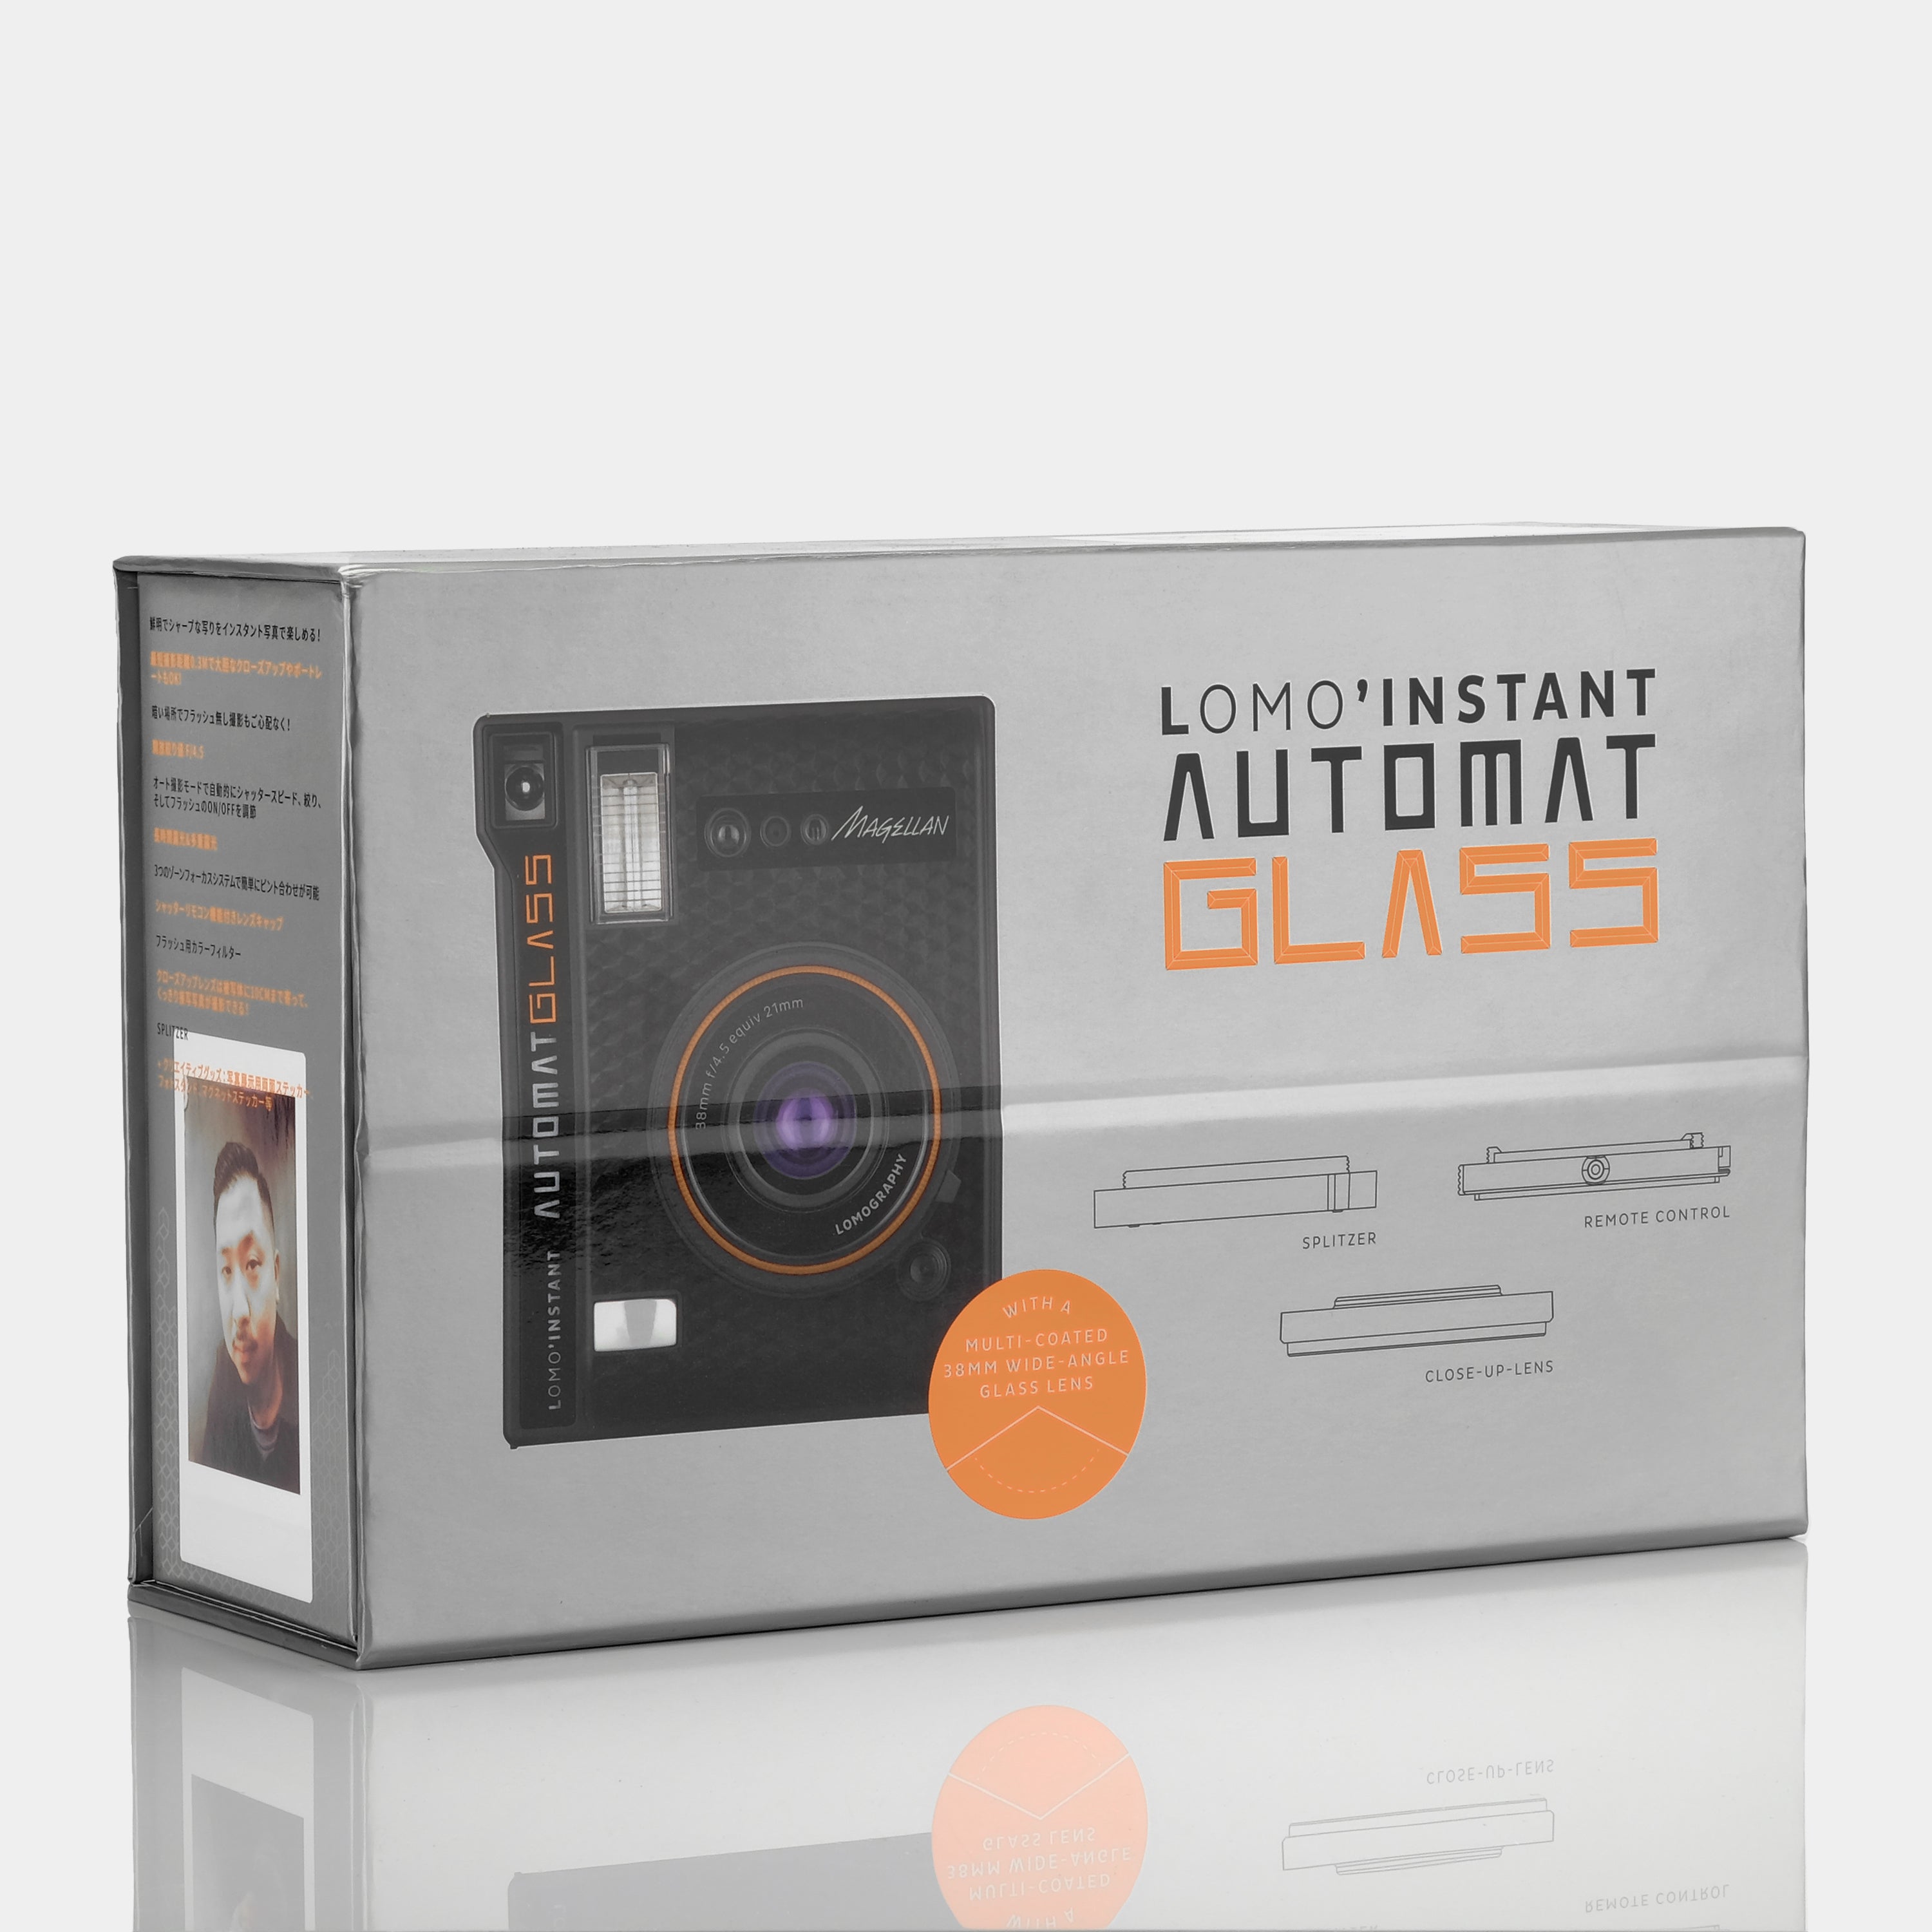 Lomography Lomo'Instant Automat Glass (Magellan Edition) Instax Mini Black Instant Film Camera